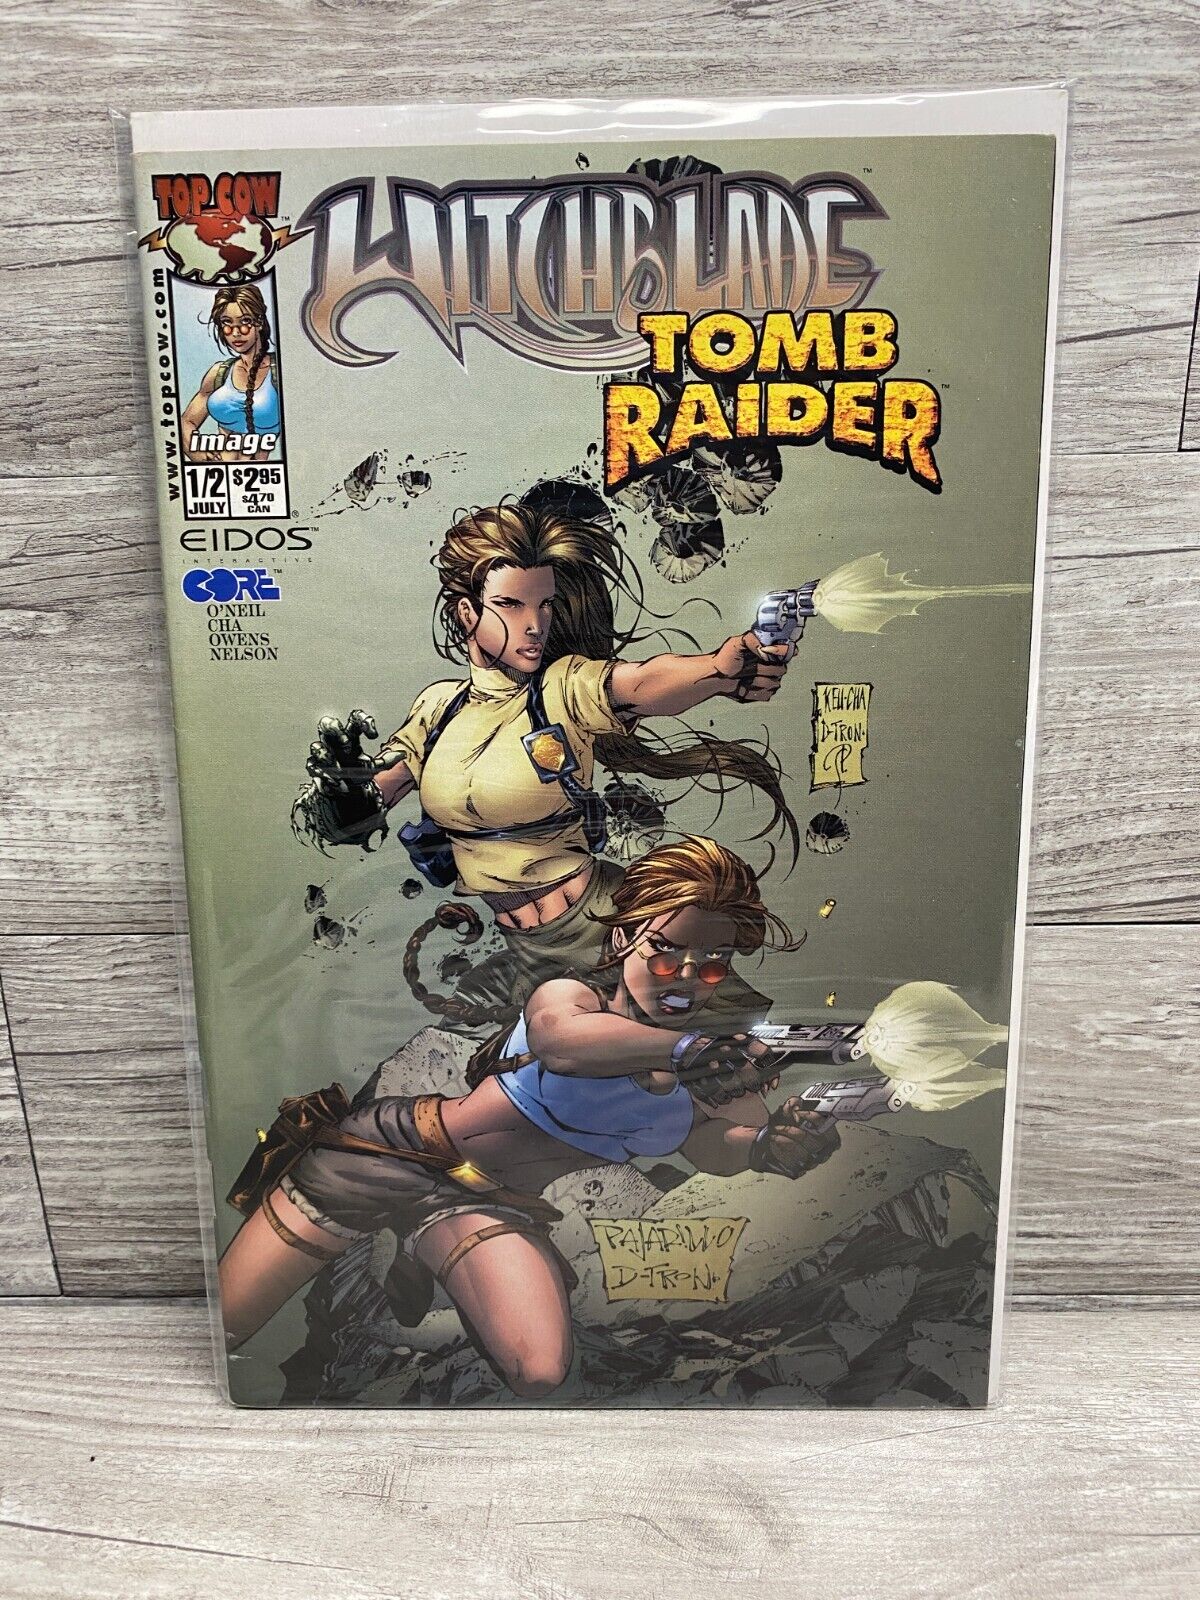 Witchblade Tomb Raider #1/2 Image Malibu Comics July 2000 Comic Book